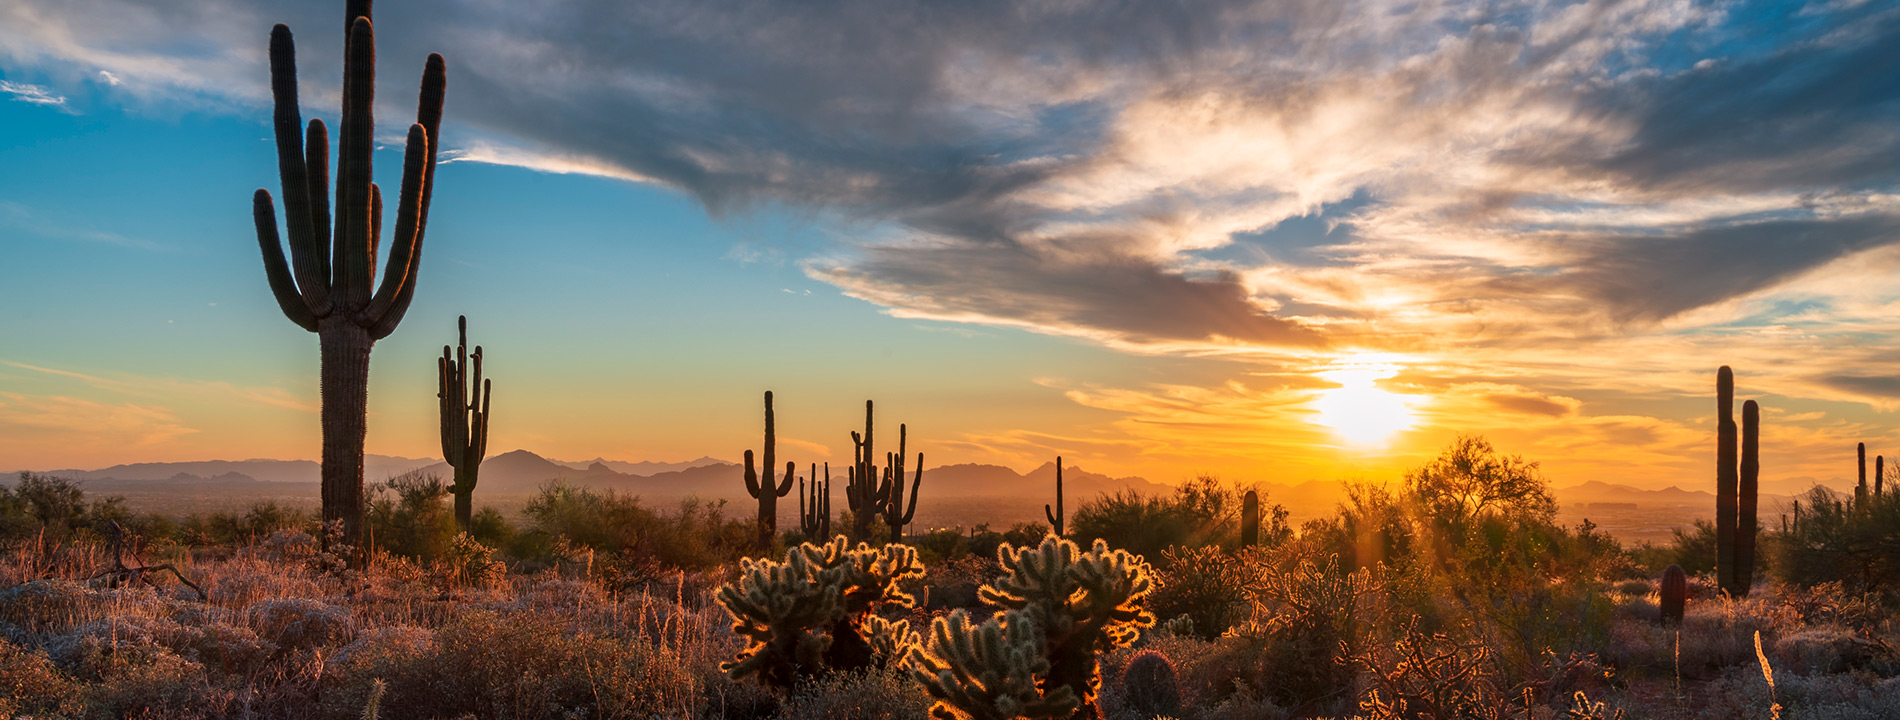 The desert in Arizona.